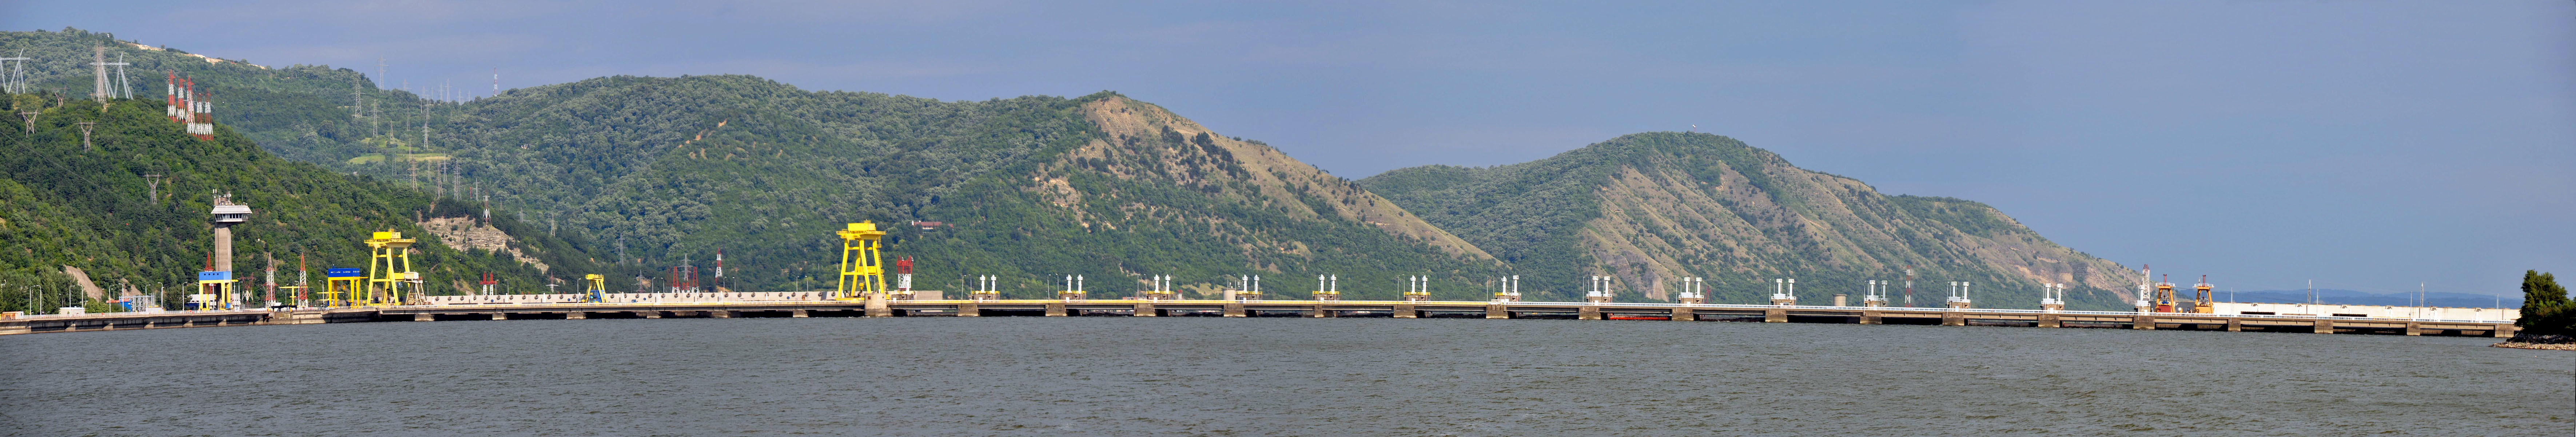 Dam of the Iron Gates - Serbia - Rumania2.jpg